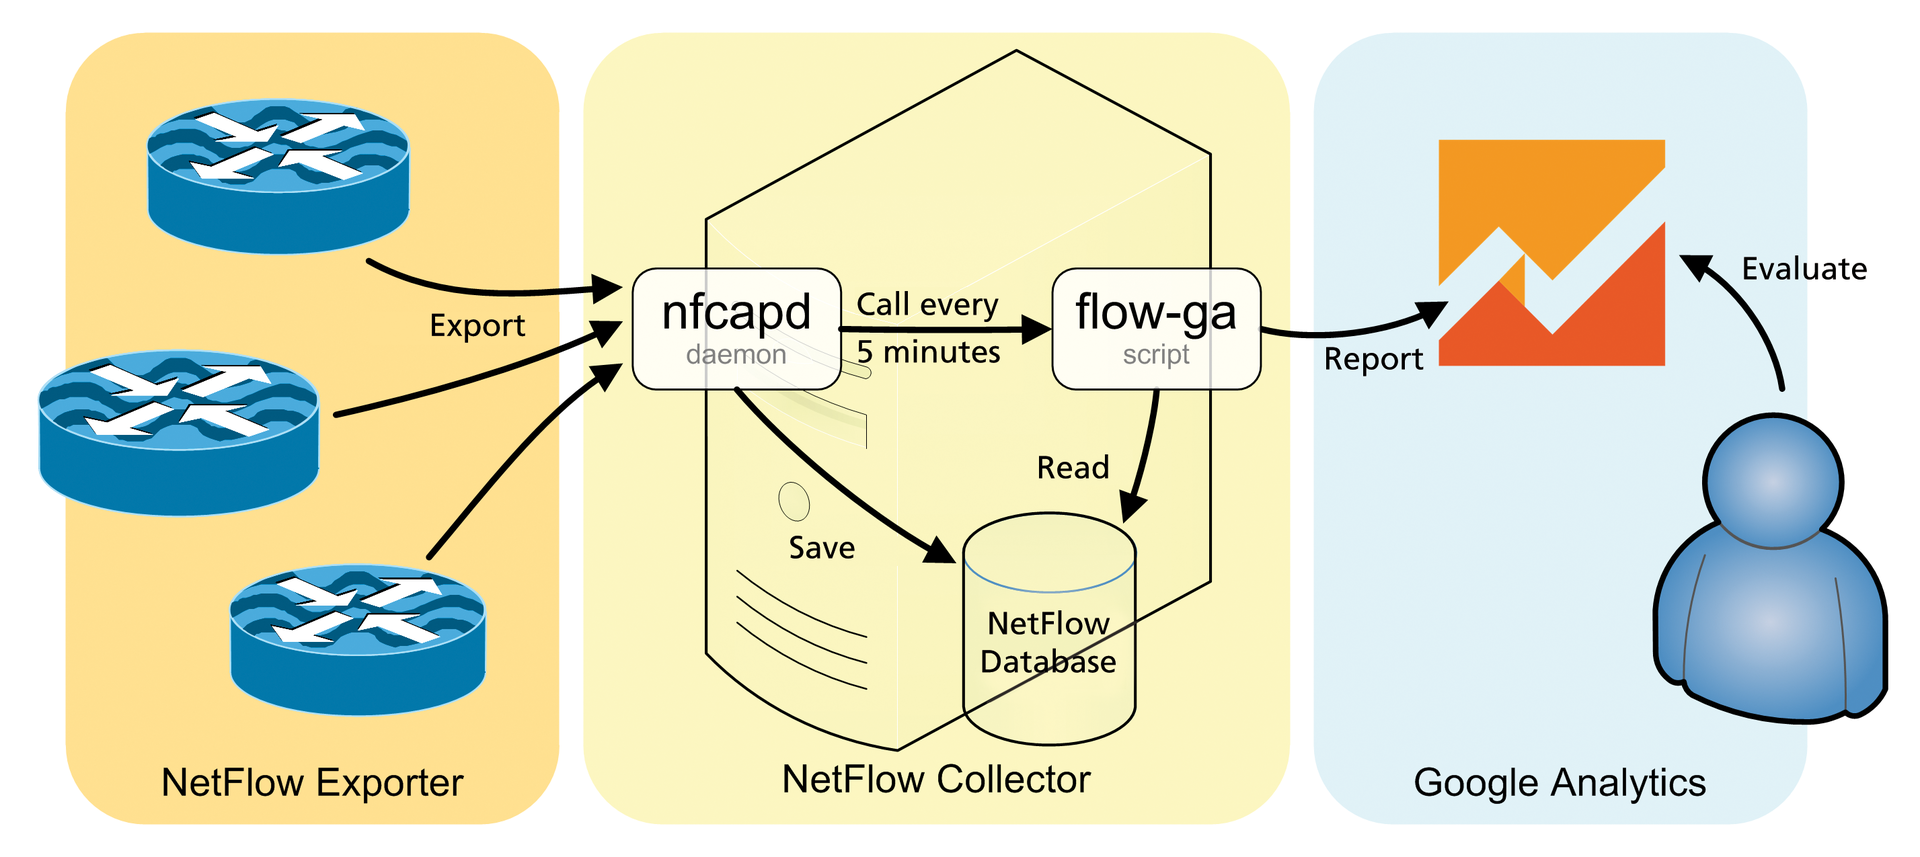 Schematic overview of NetFlow data analysis using Google Analytics. 